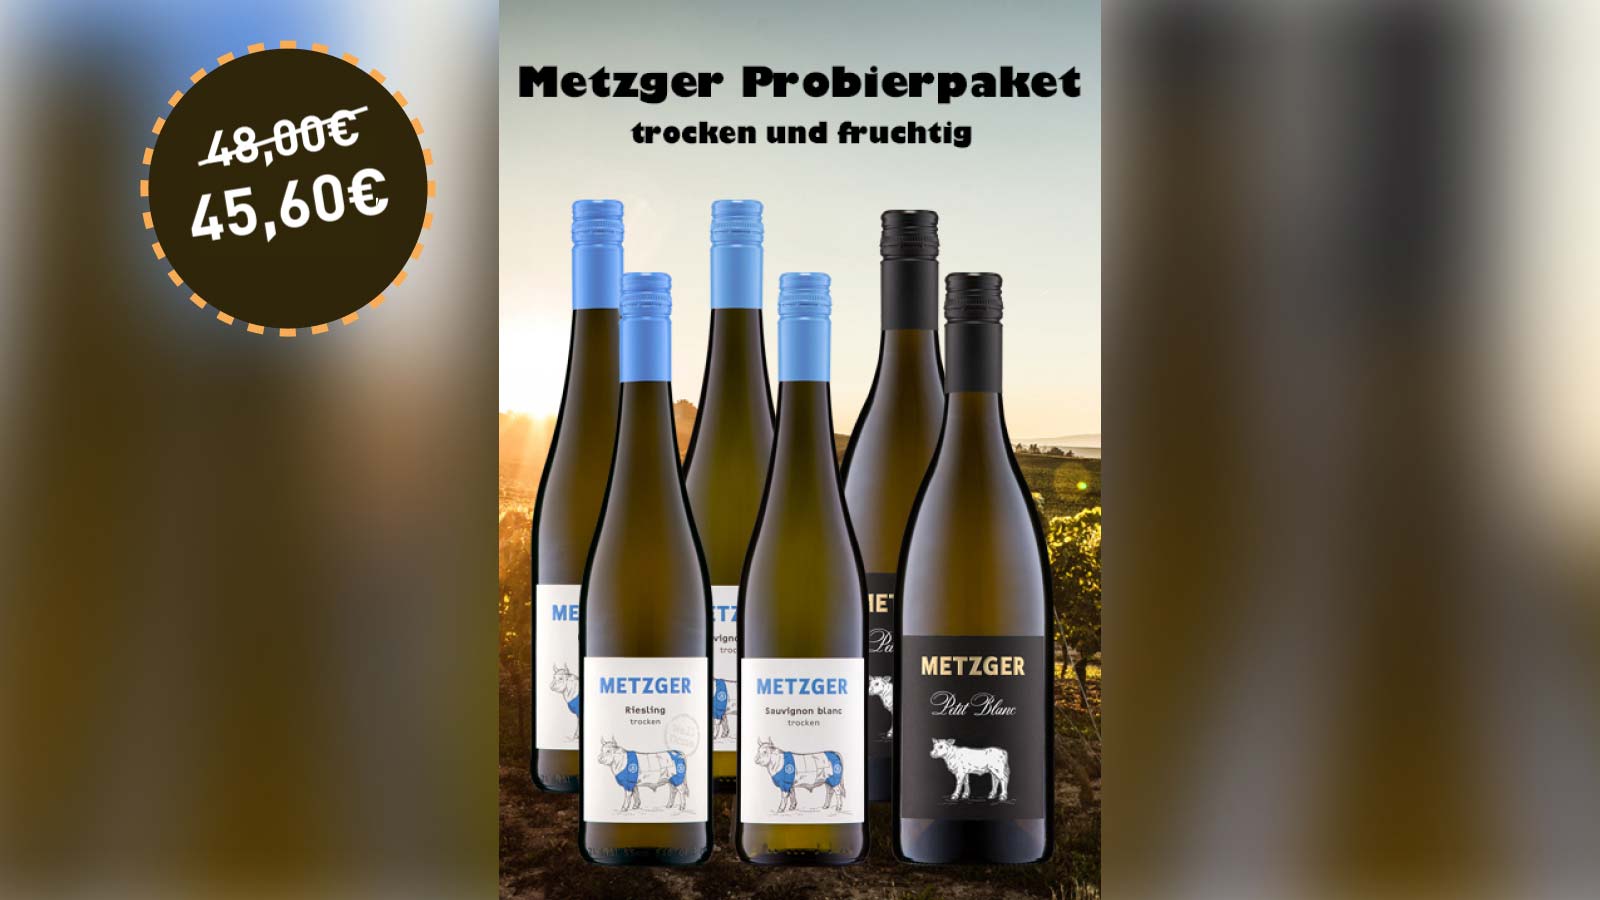 Metzger Wein Probierpaket trocken fruchtig